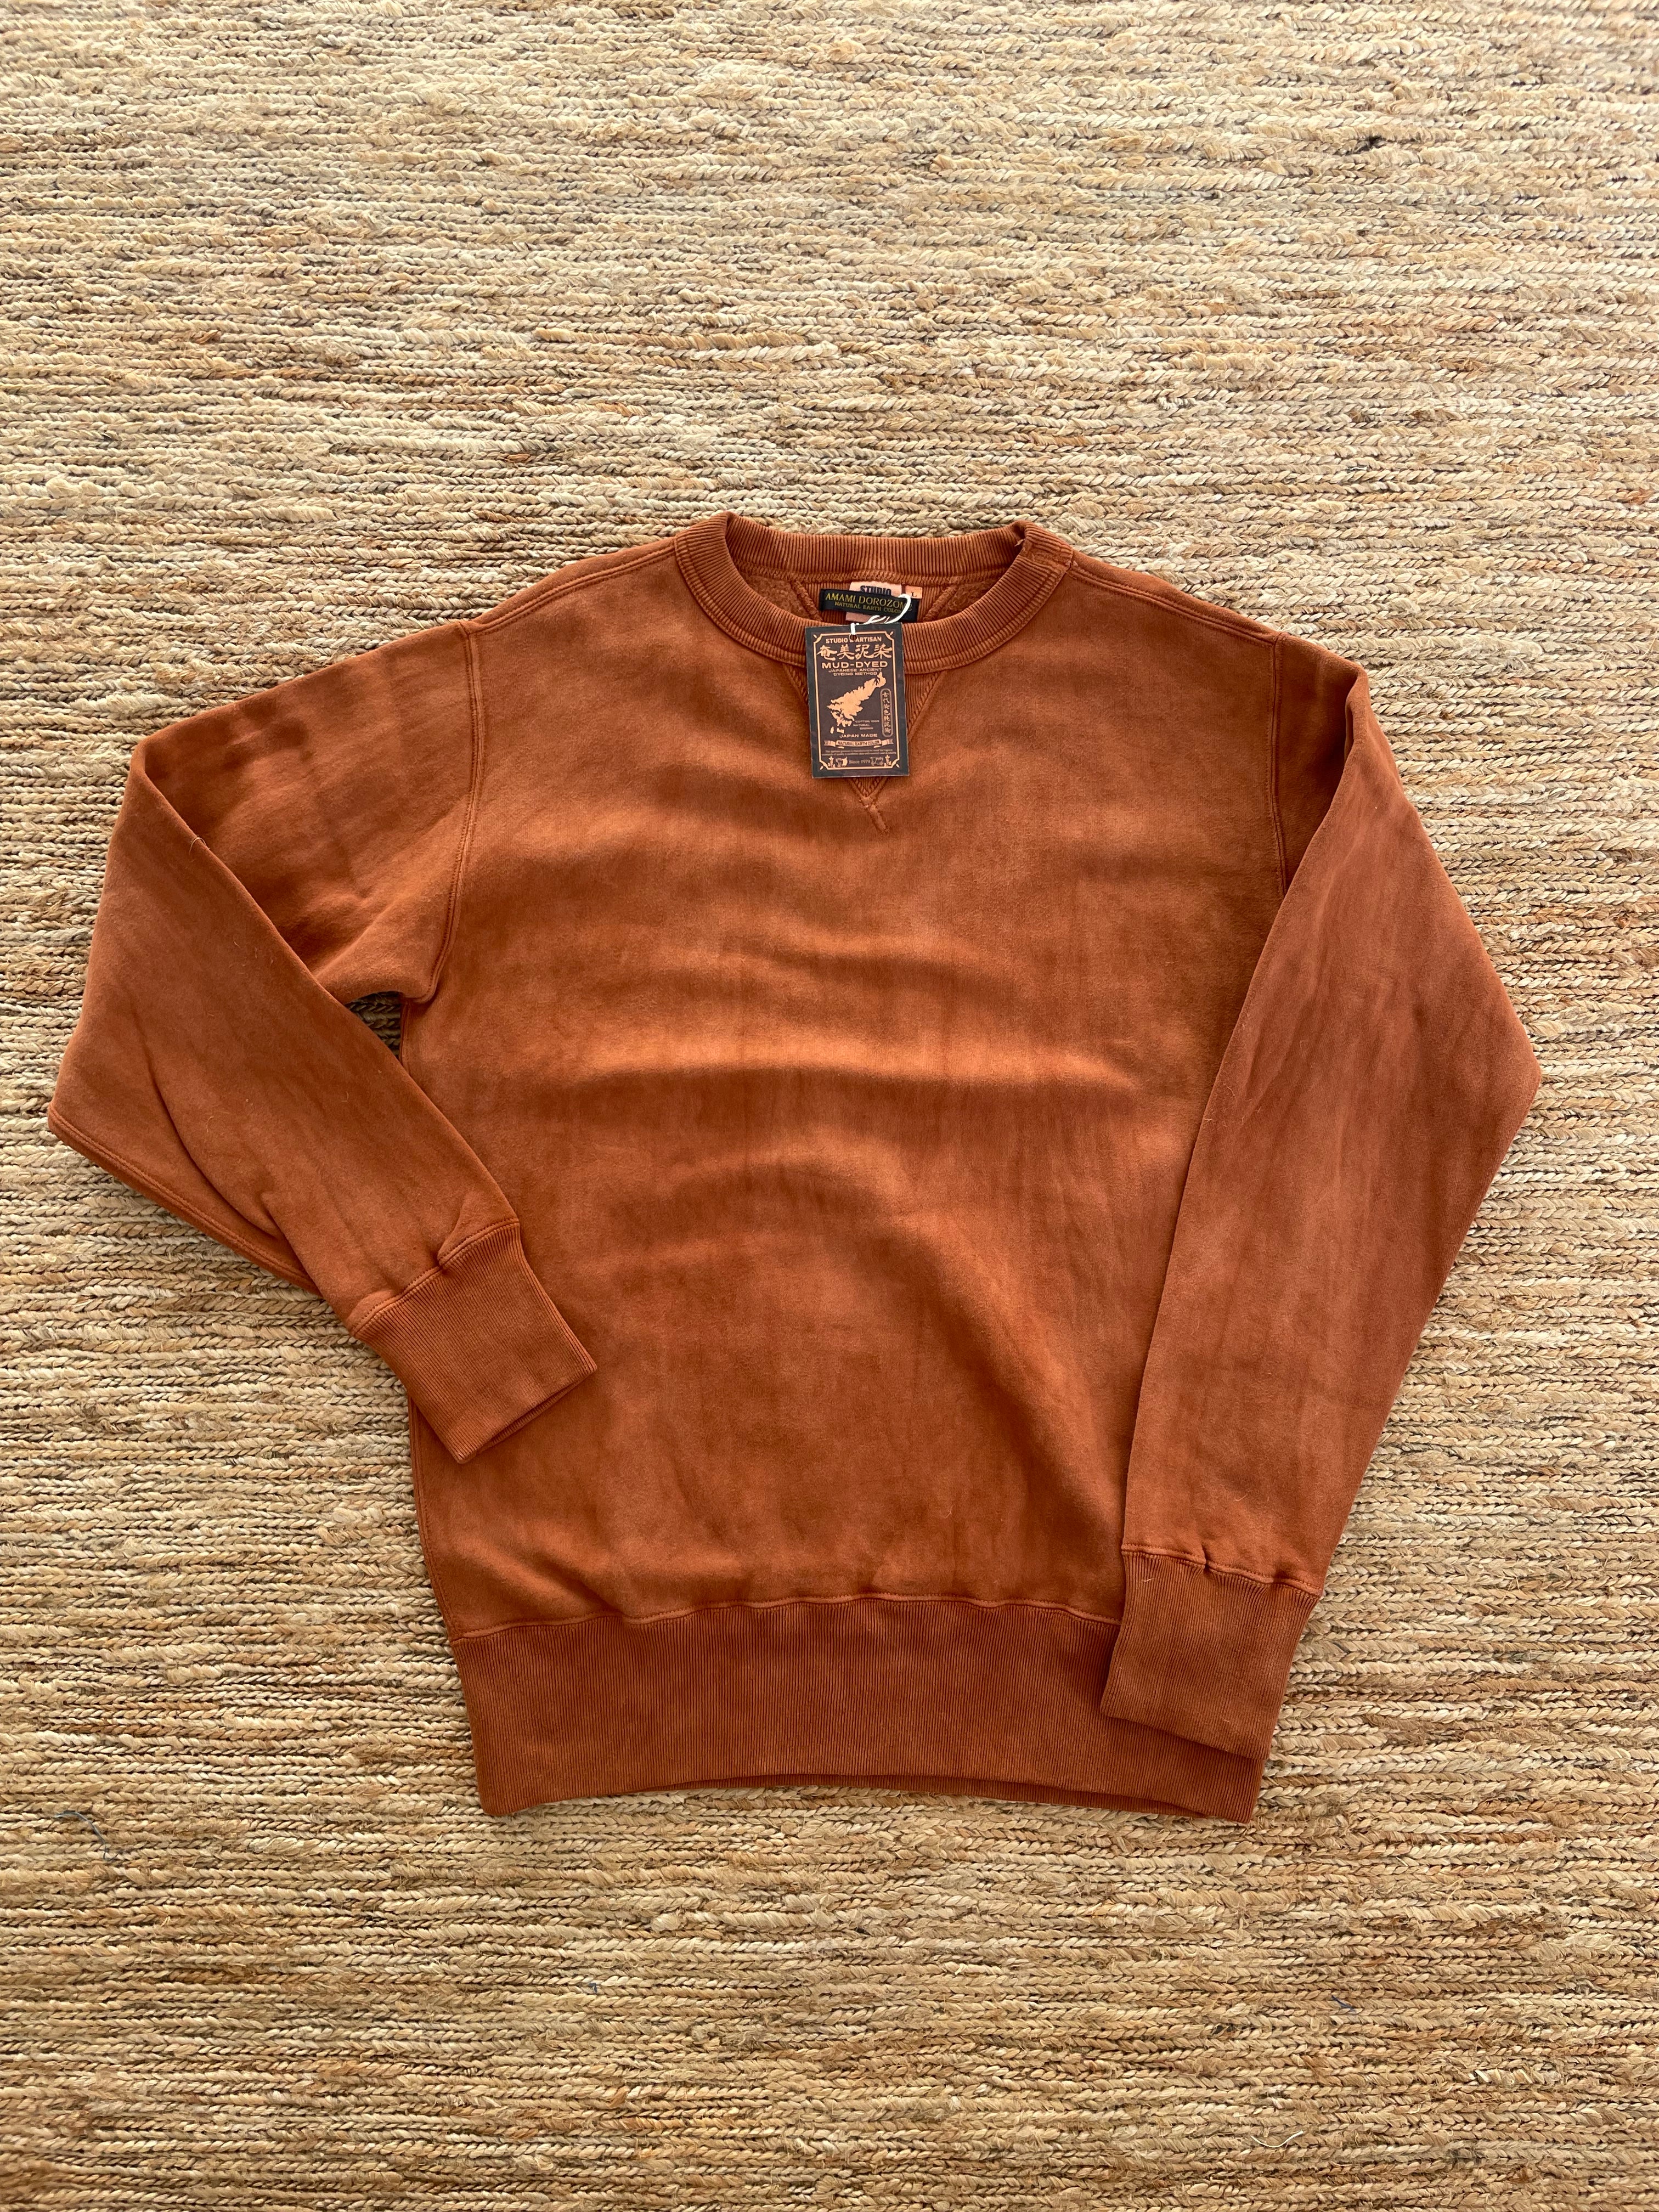 Amami Dorozome Mud-Dyed Tsuriami Loopwheel "Eastener Sweatshirt" in Brown